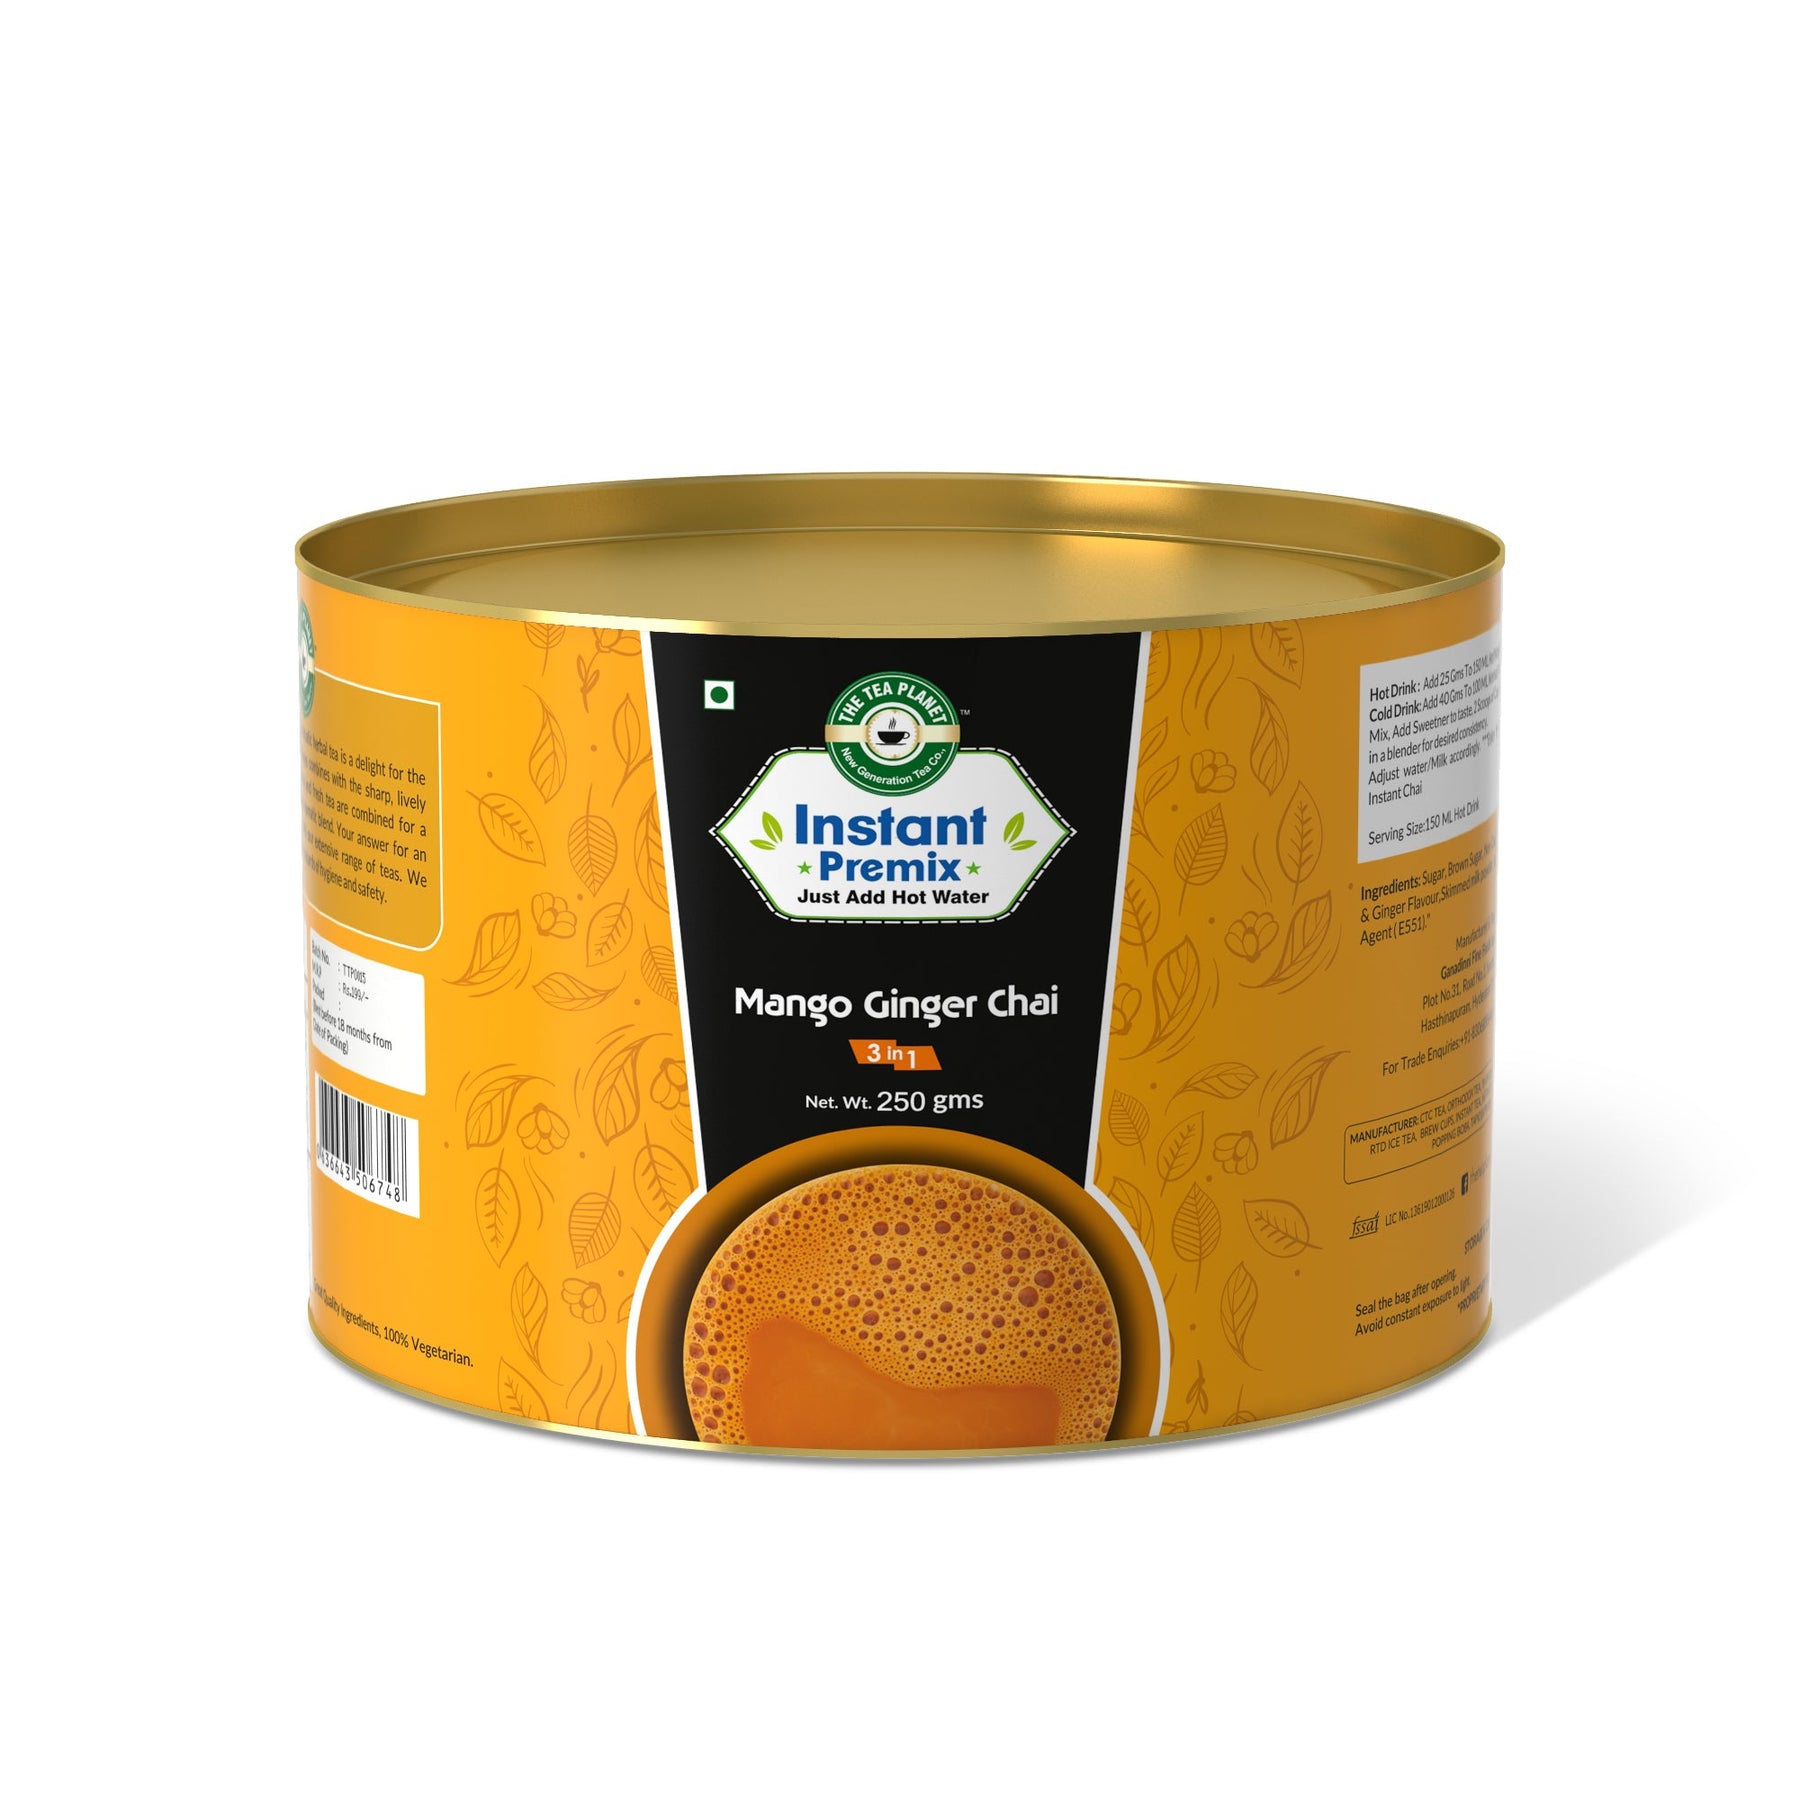 Mango Ginger Chai Premix (3 in 1) - 250 gms